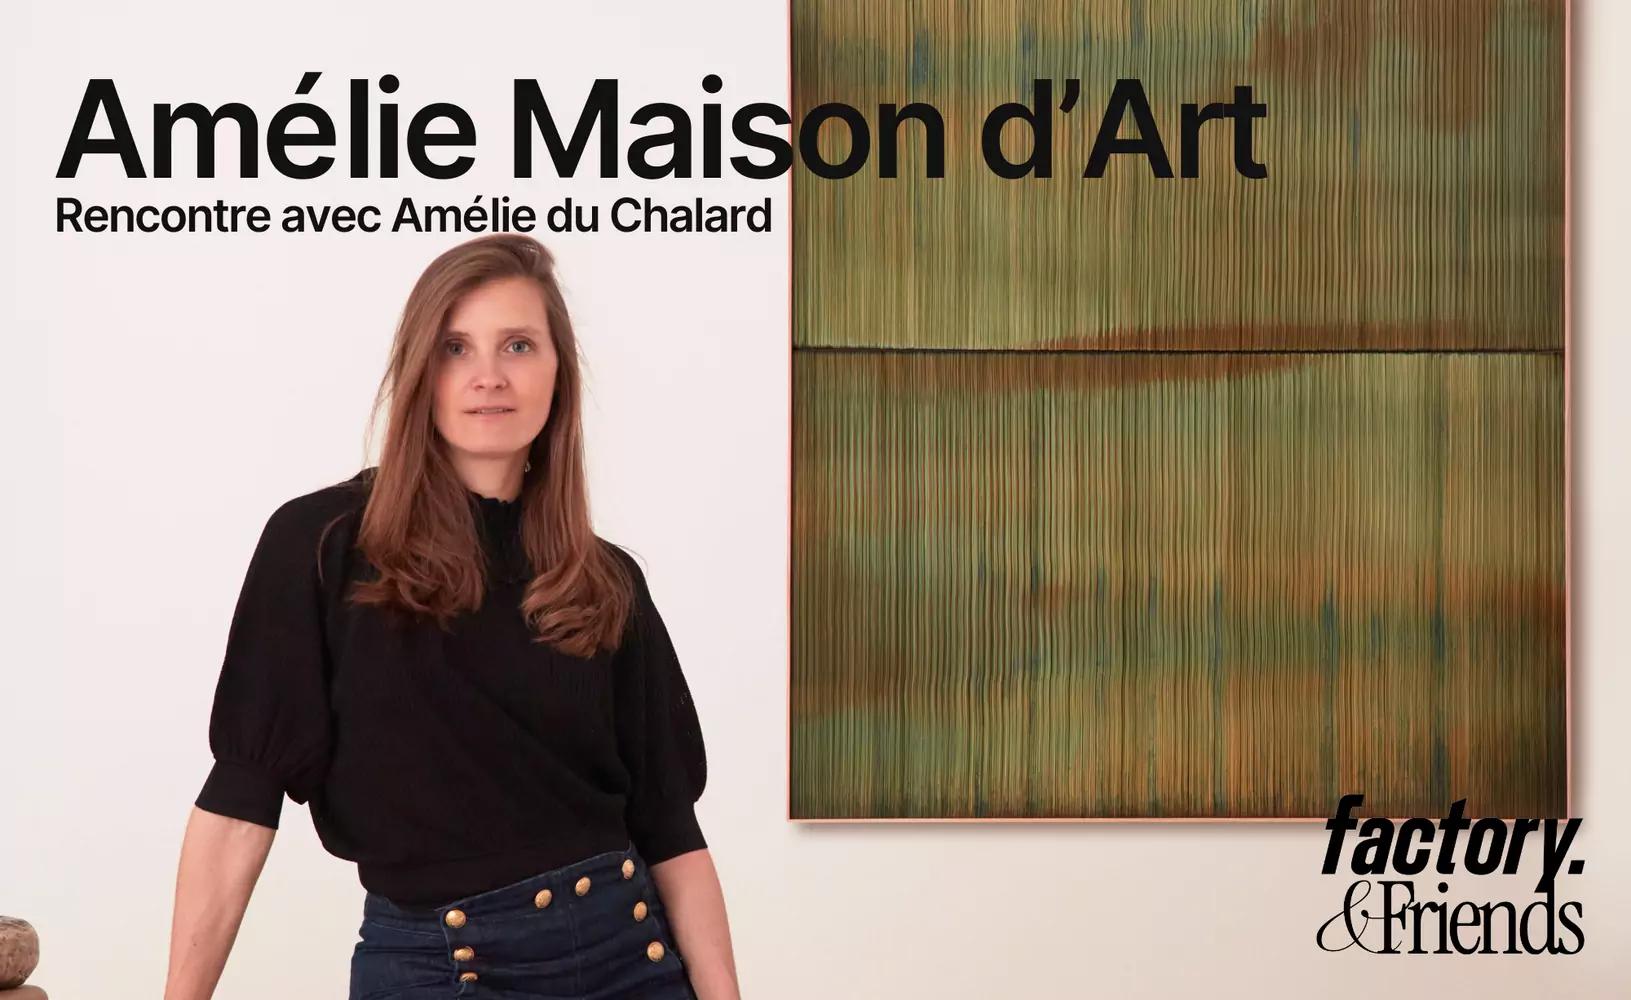 Amélie Maison d'Art